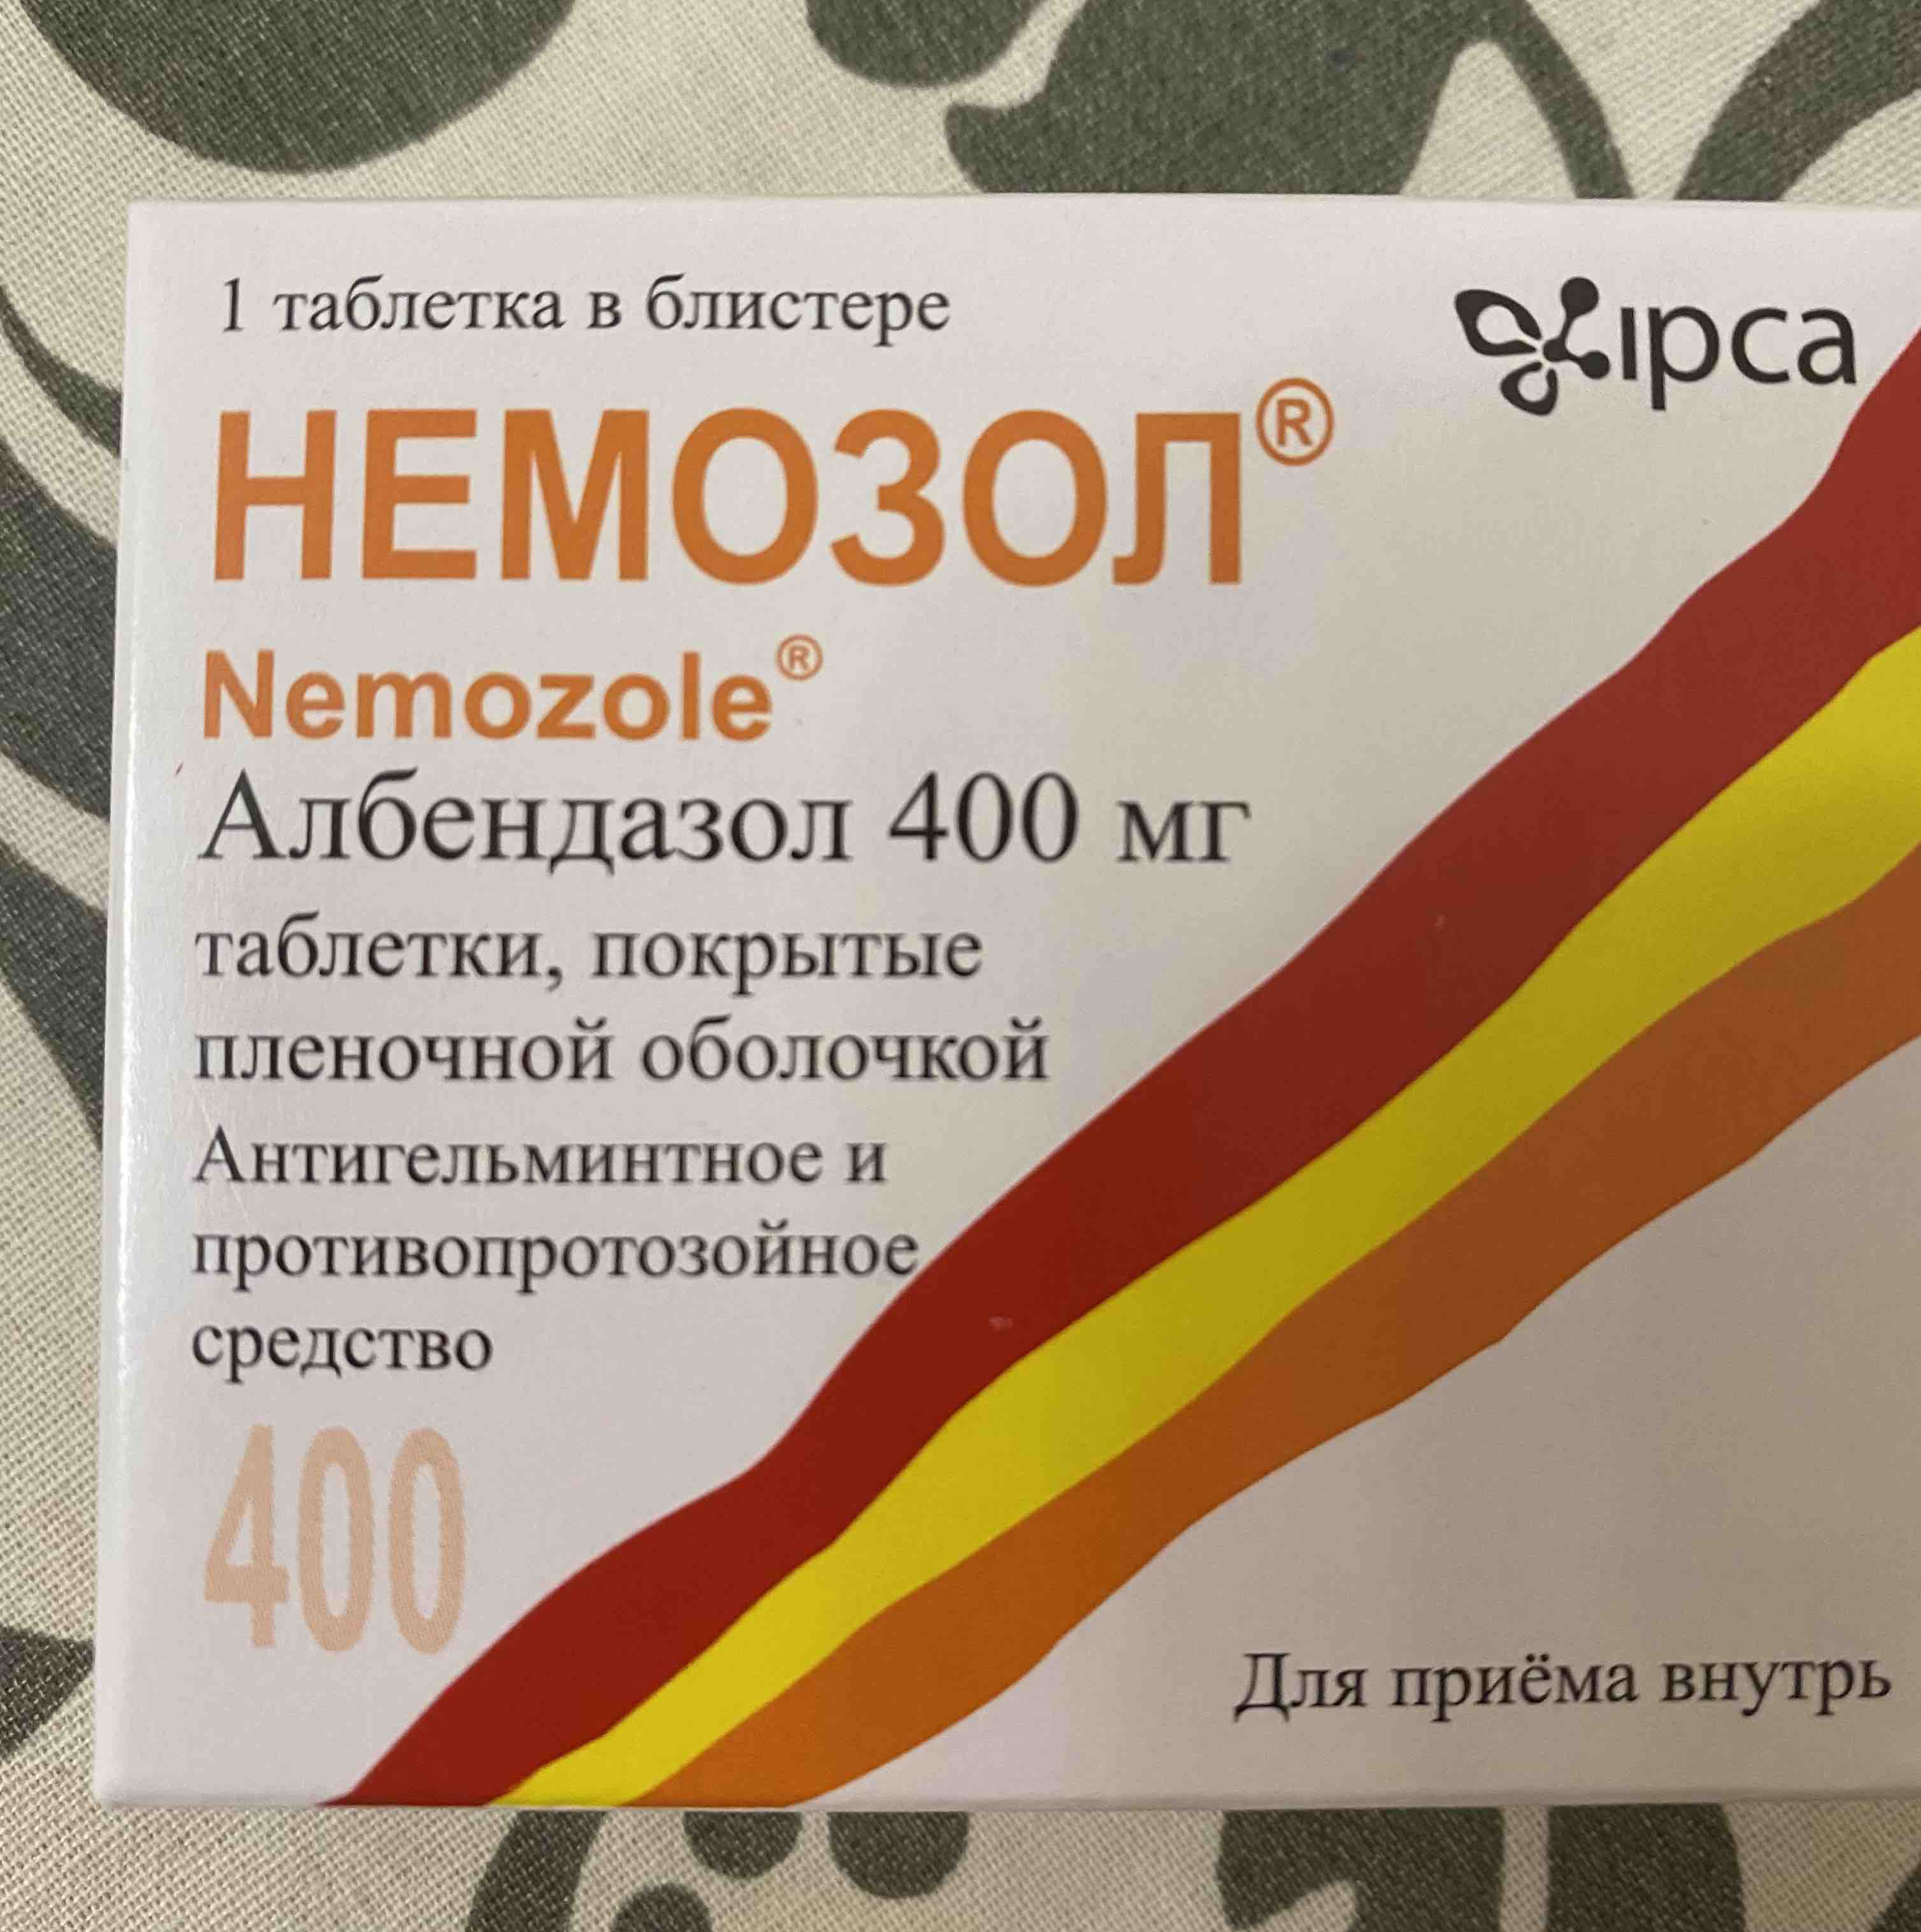 ORTHOMOL Fertil Plus таблетки + капсулы, 30 шт.